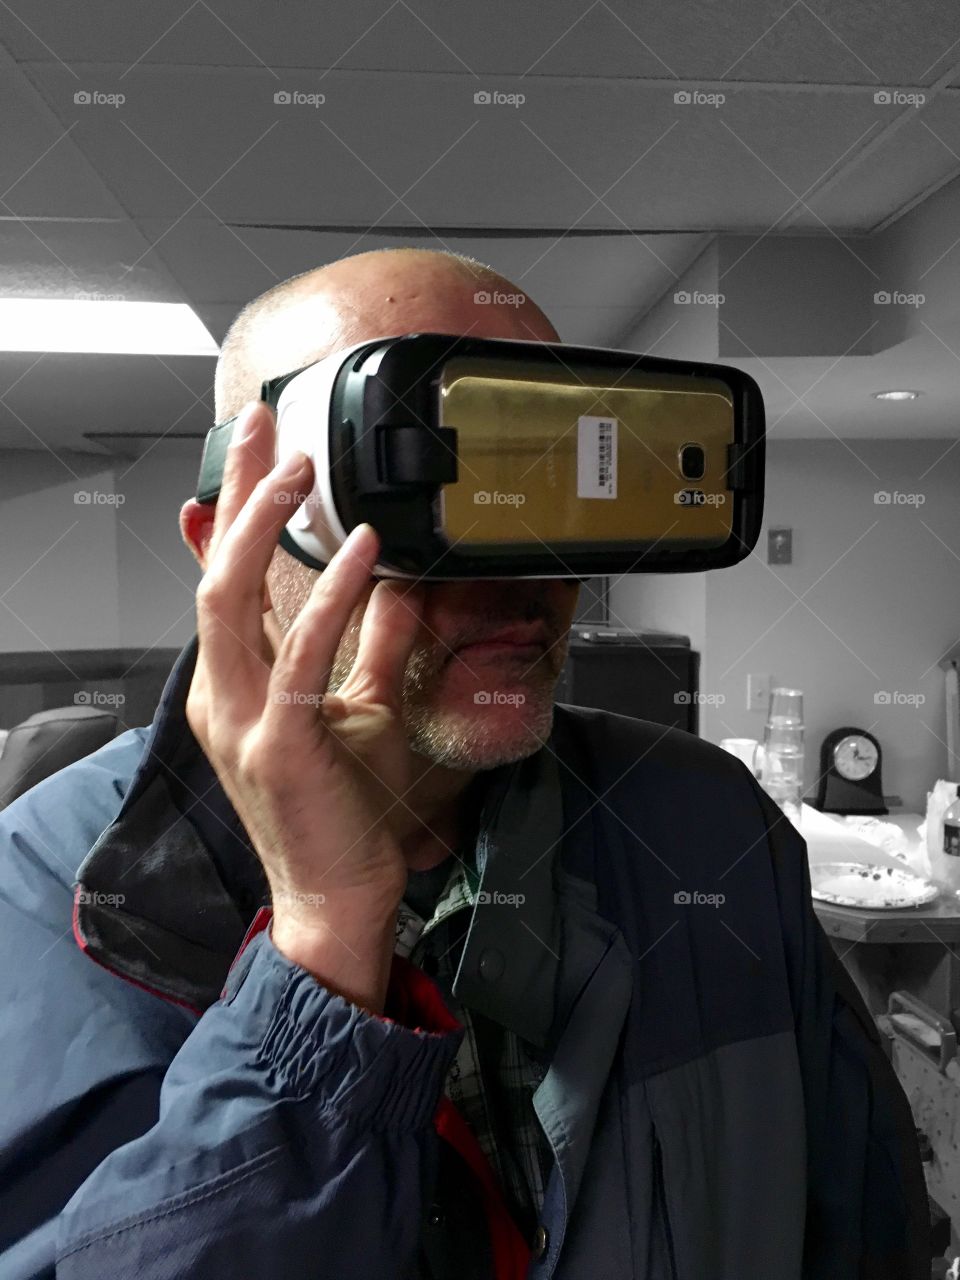 New virtual reality goggles